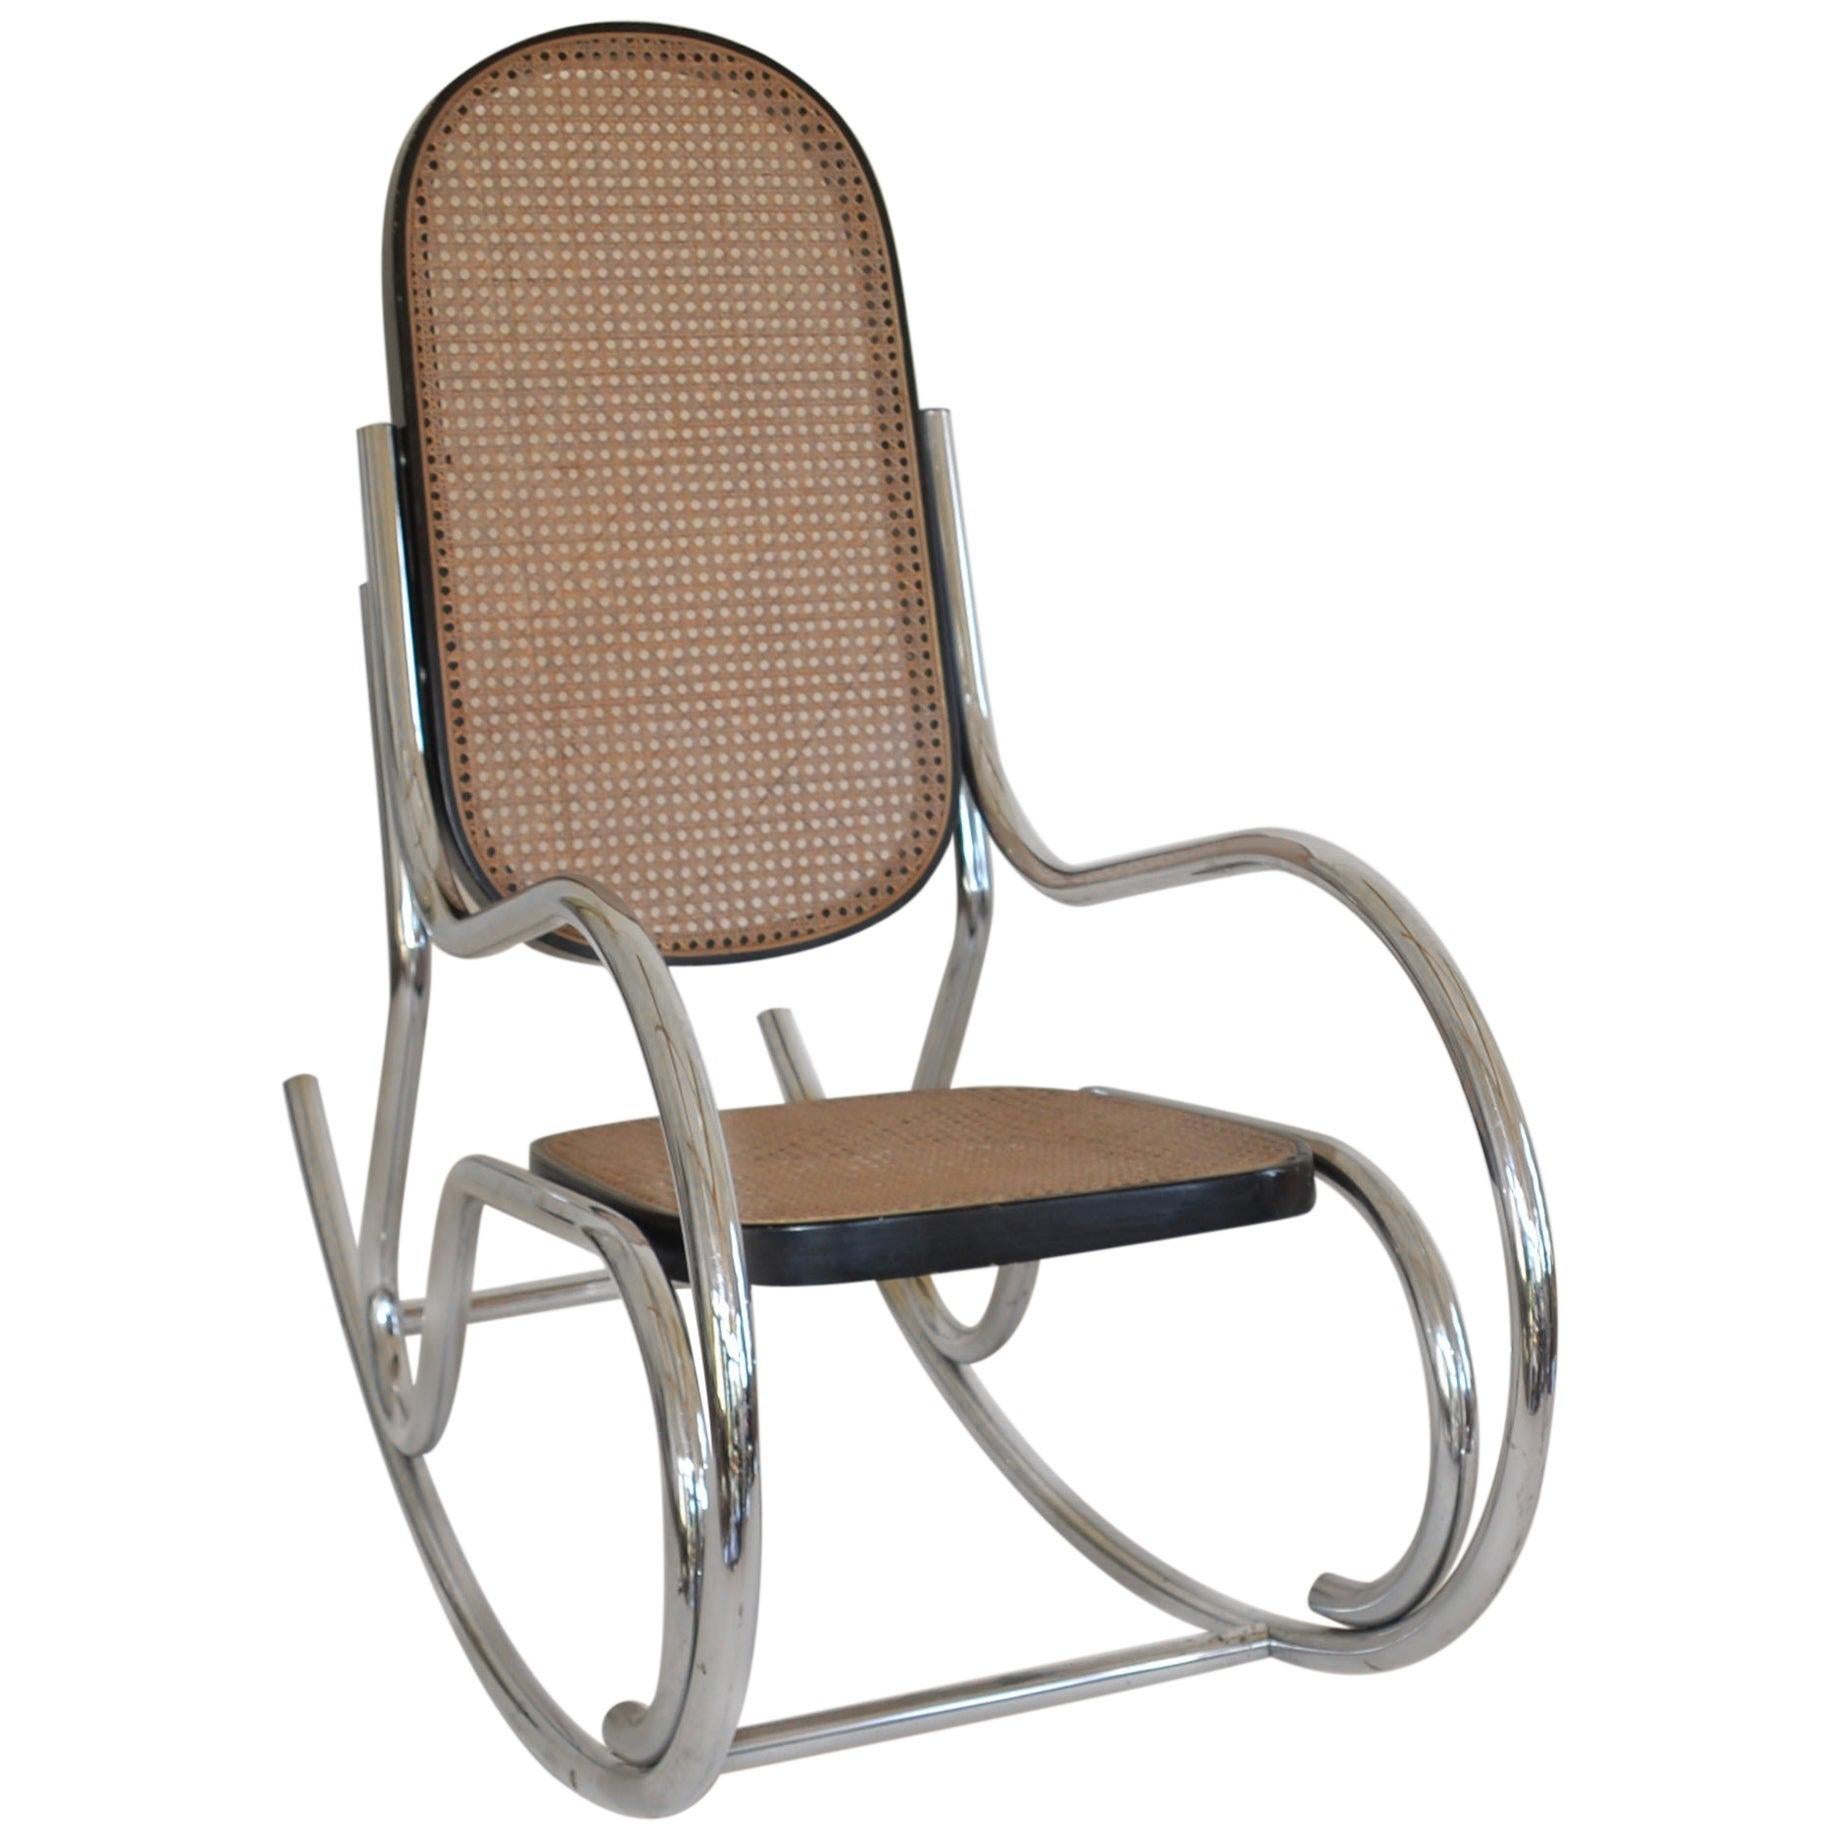 Vintage Marcel Breuer Style Rocking Chair